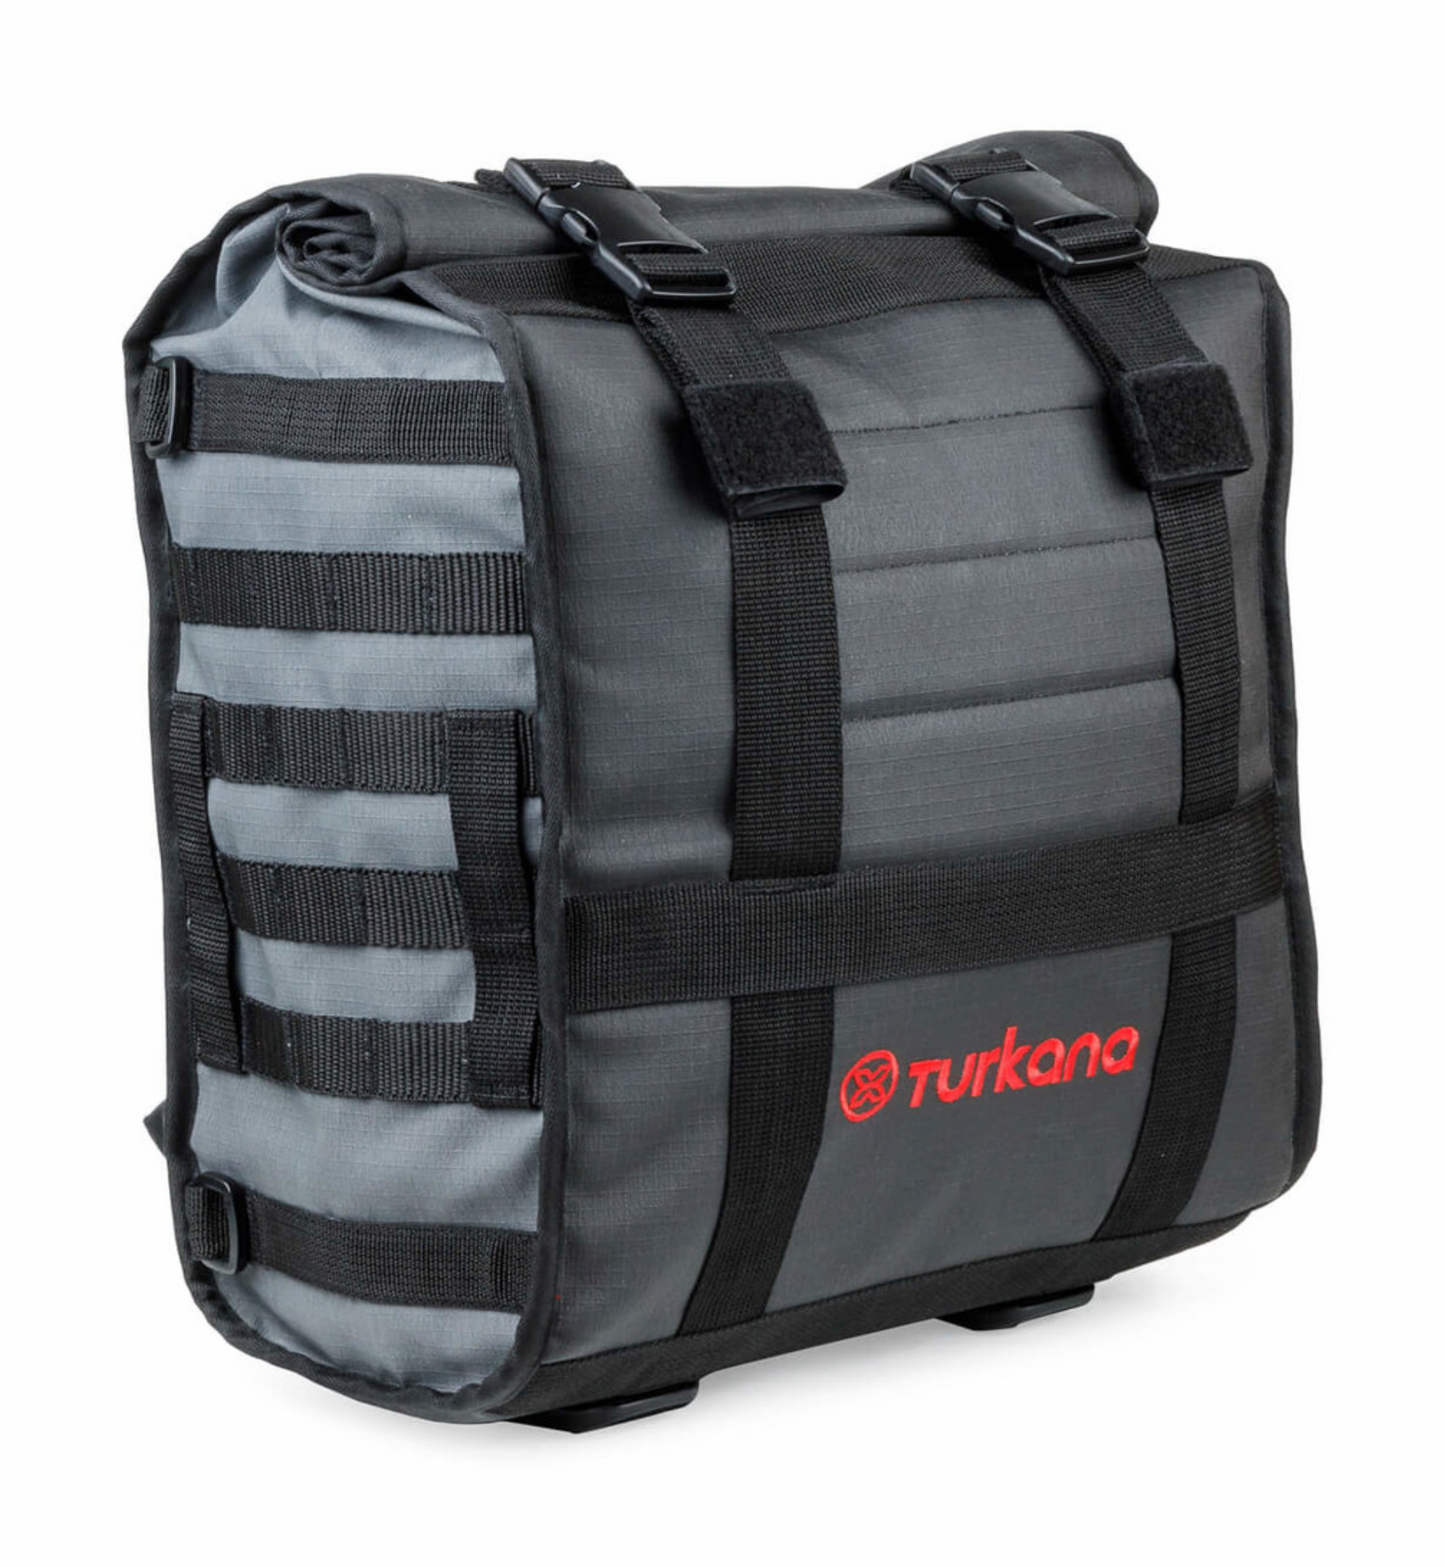 Turkana 8 Piece ADV Soft Luggage Set - HippoHips™ Hybrid STRAP